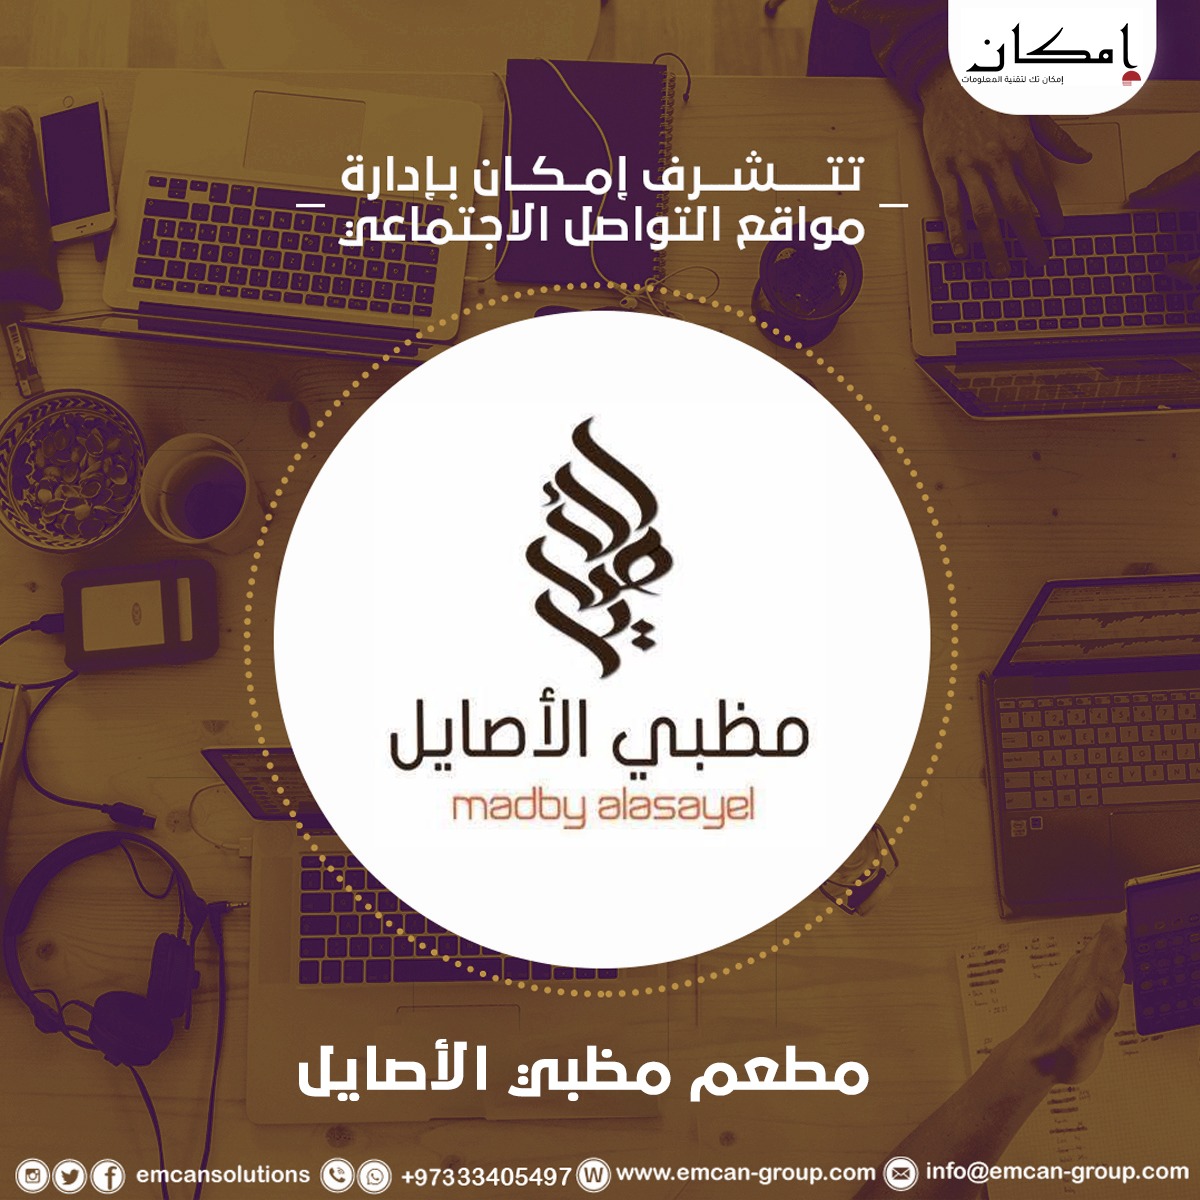 Social media management for Madhbi Al Asayel Restaurant